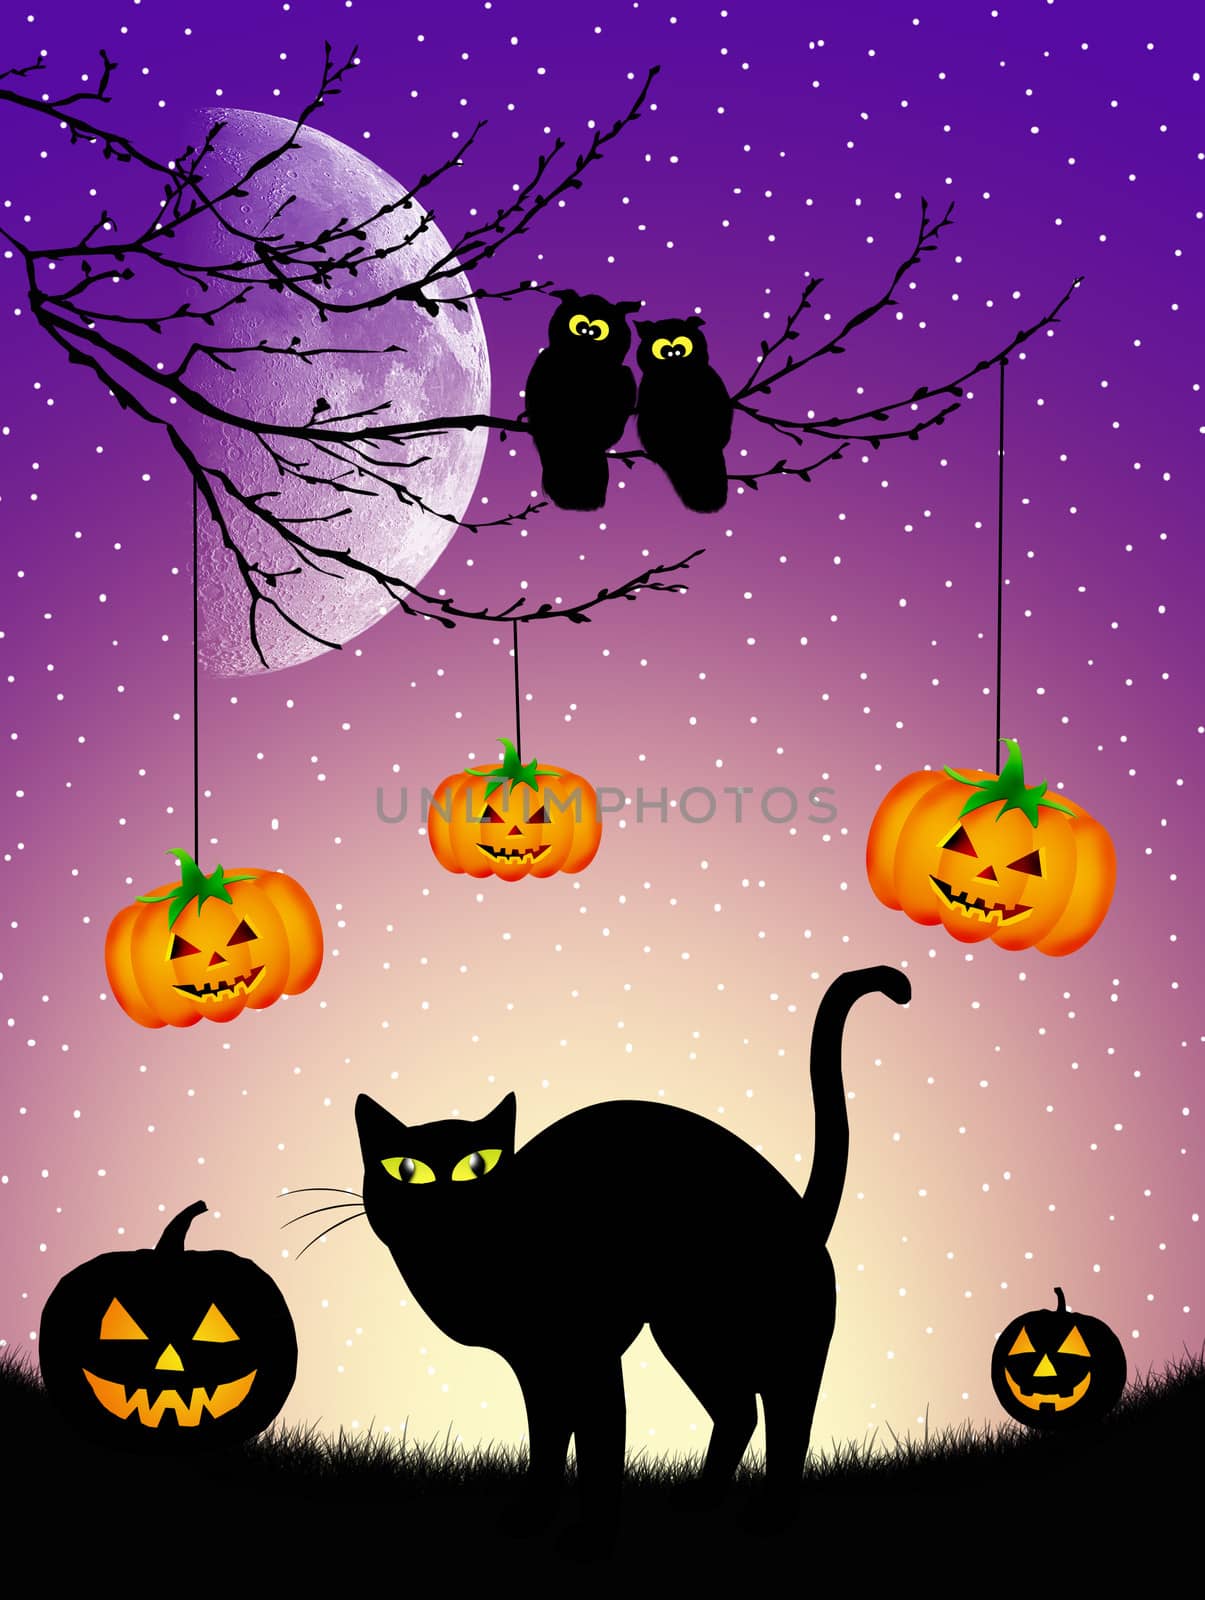 Black cat on Halloween